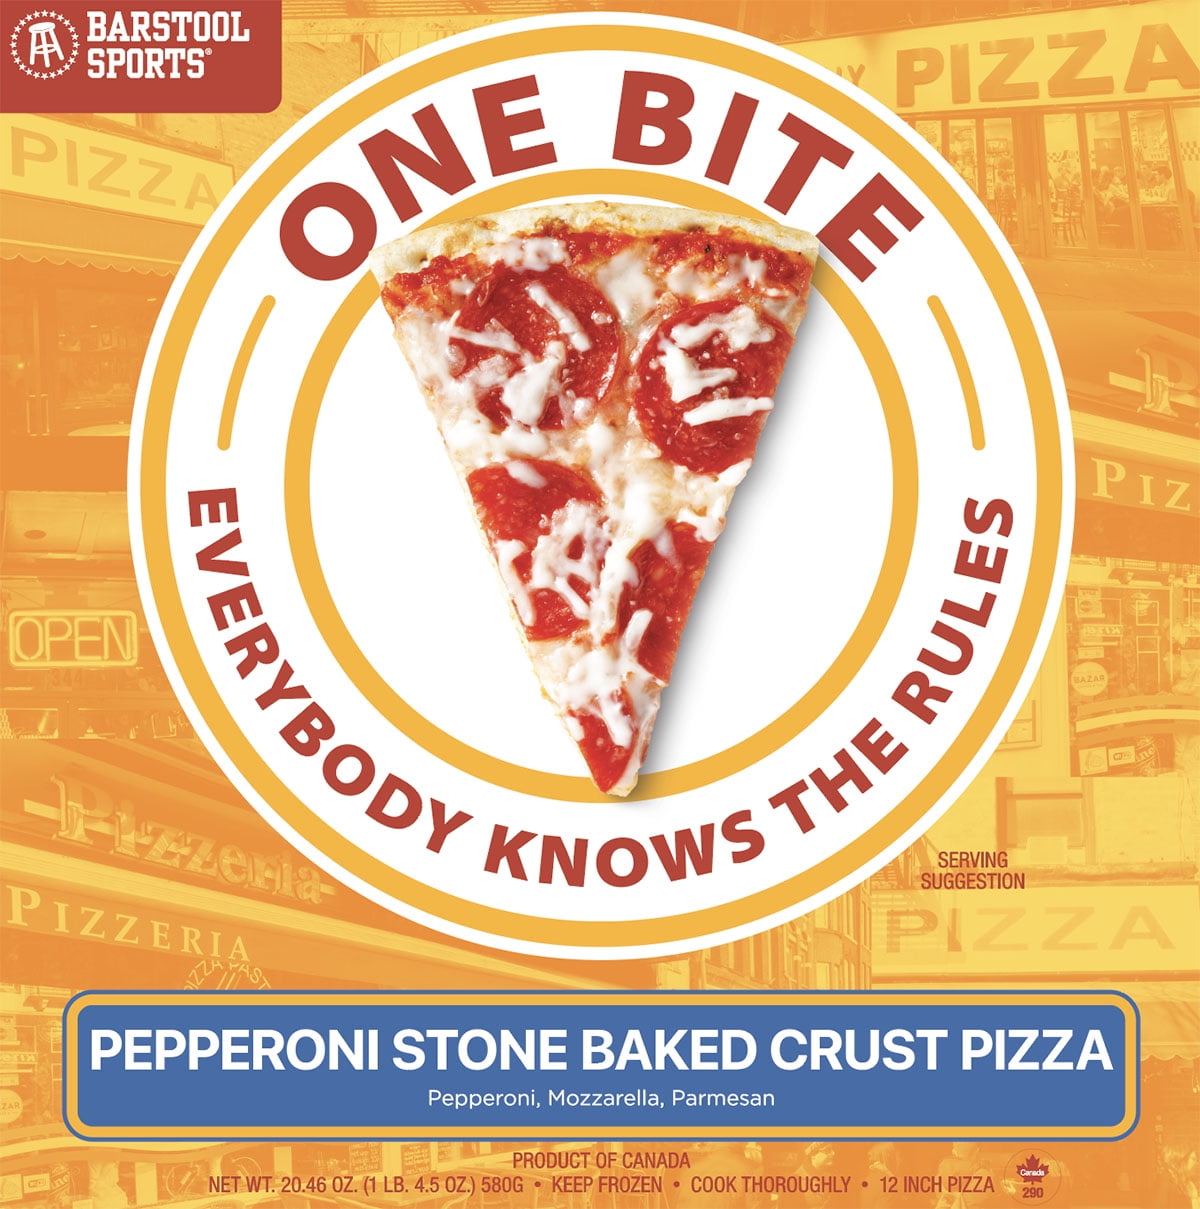 Barstool Sports One Bite Pepperoni Frozen Pizza 12" 20.46 oz